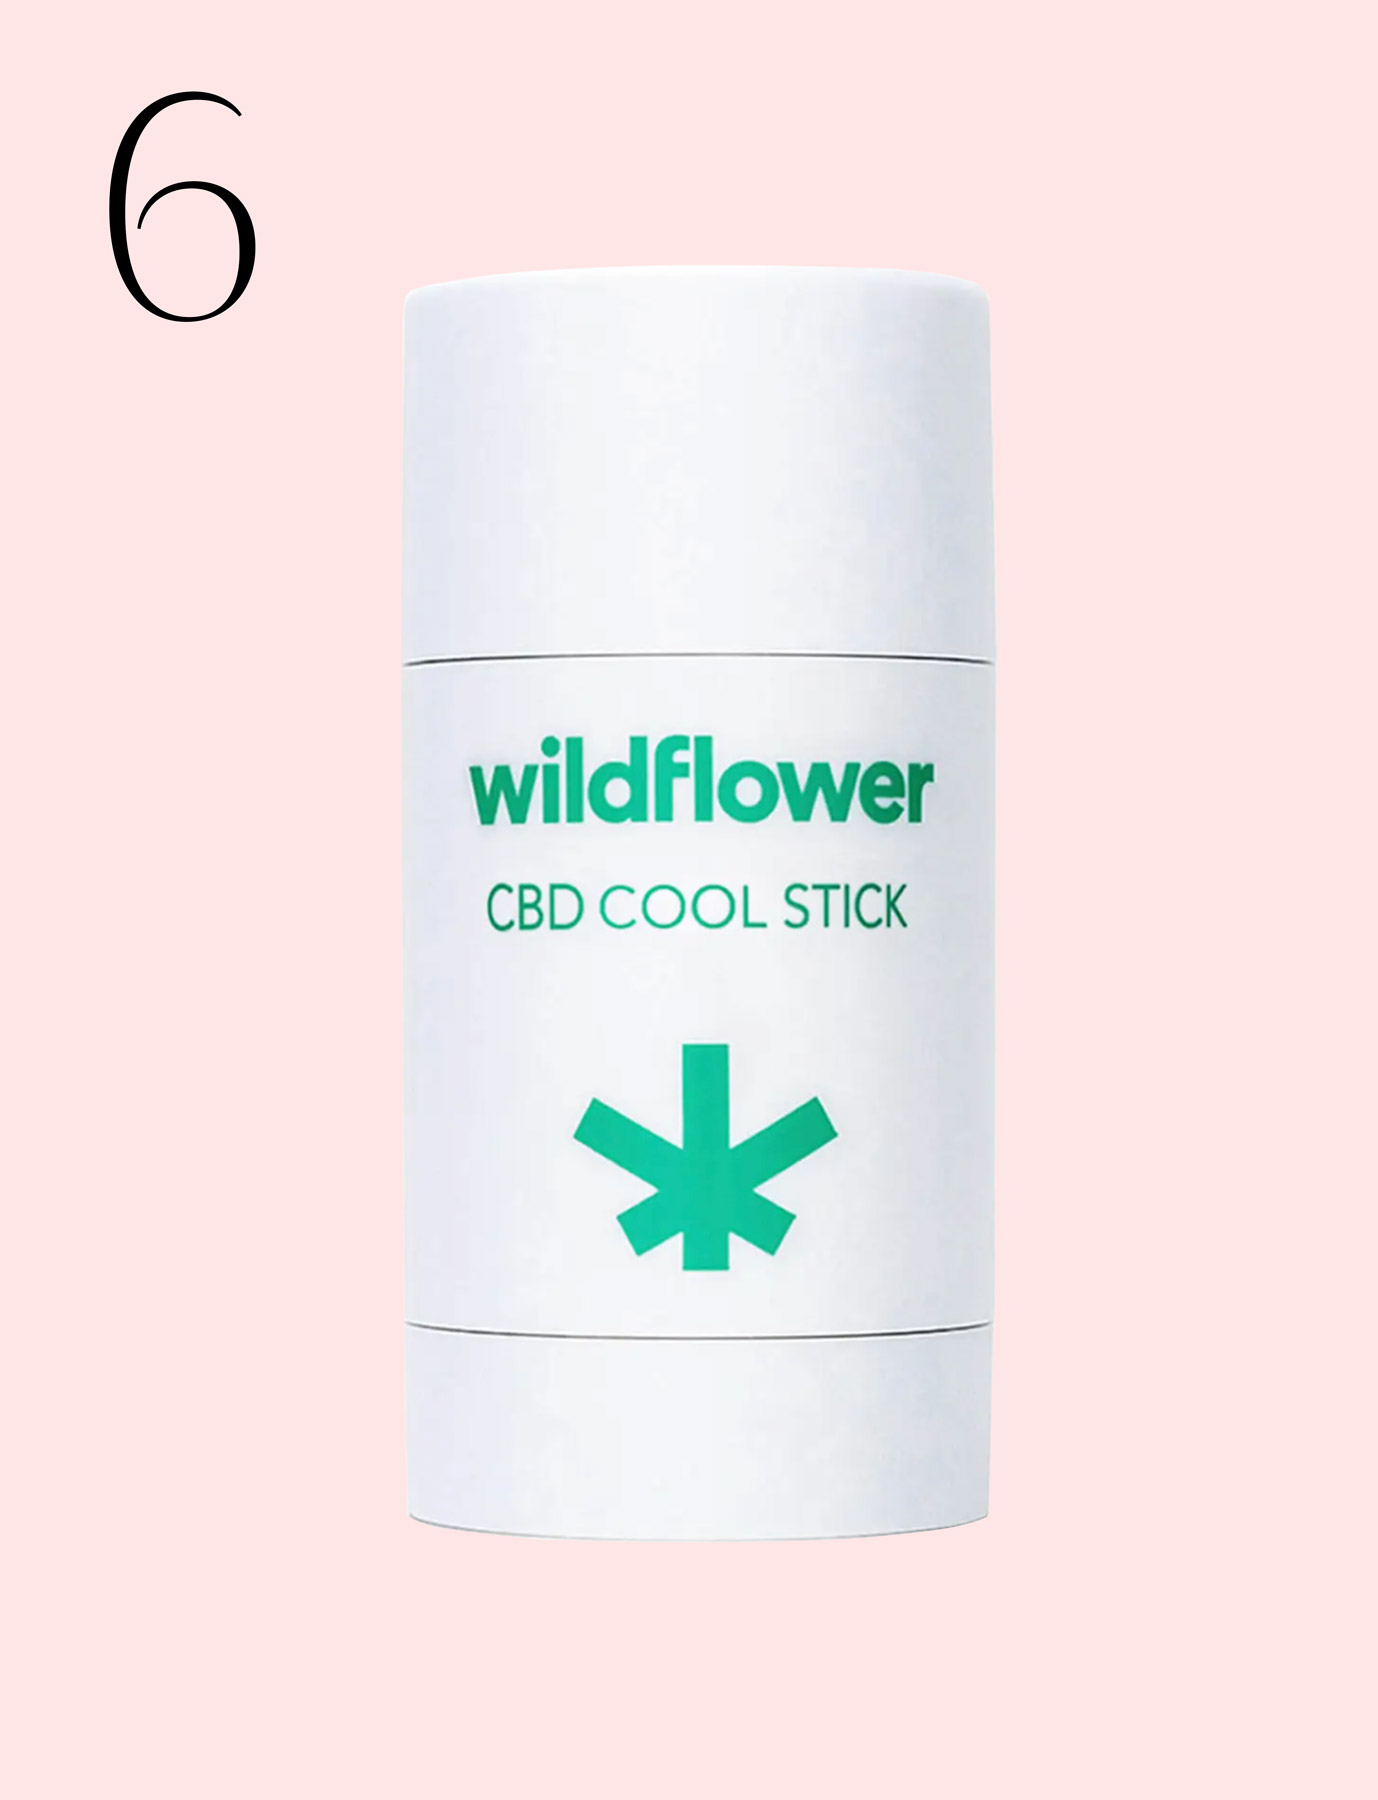 Wildflower CBD cool stick